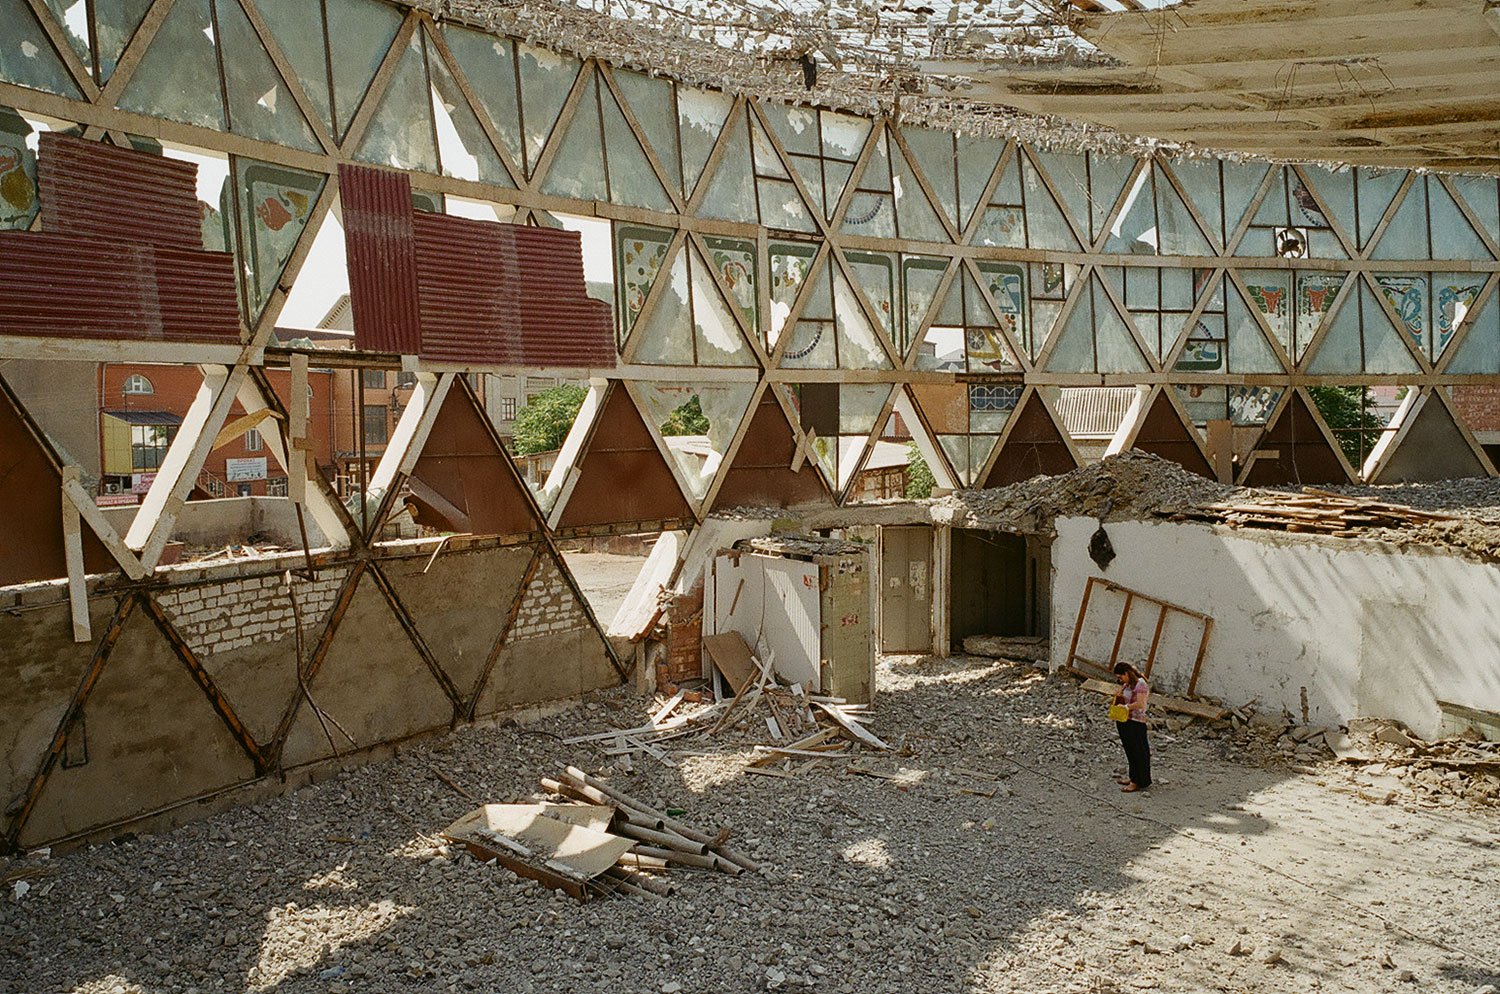 Come undone: a last glimpse inside a Soviet-era Dagestani bazaar